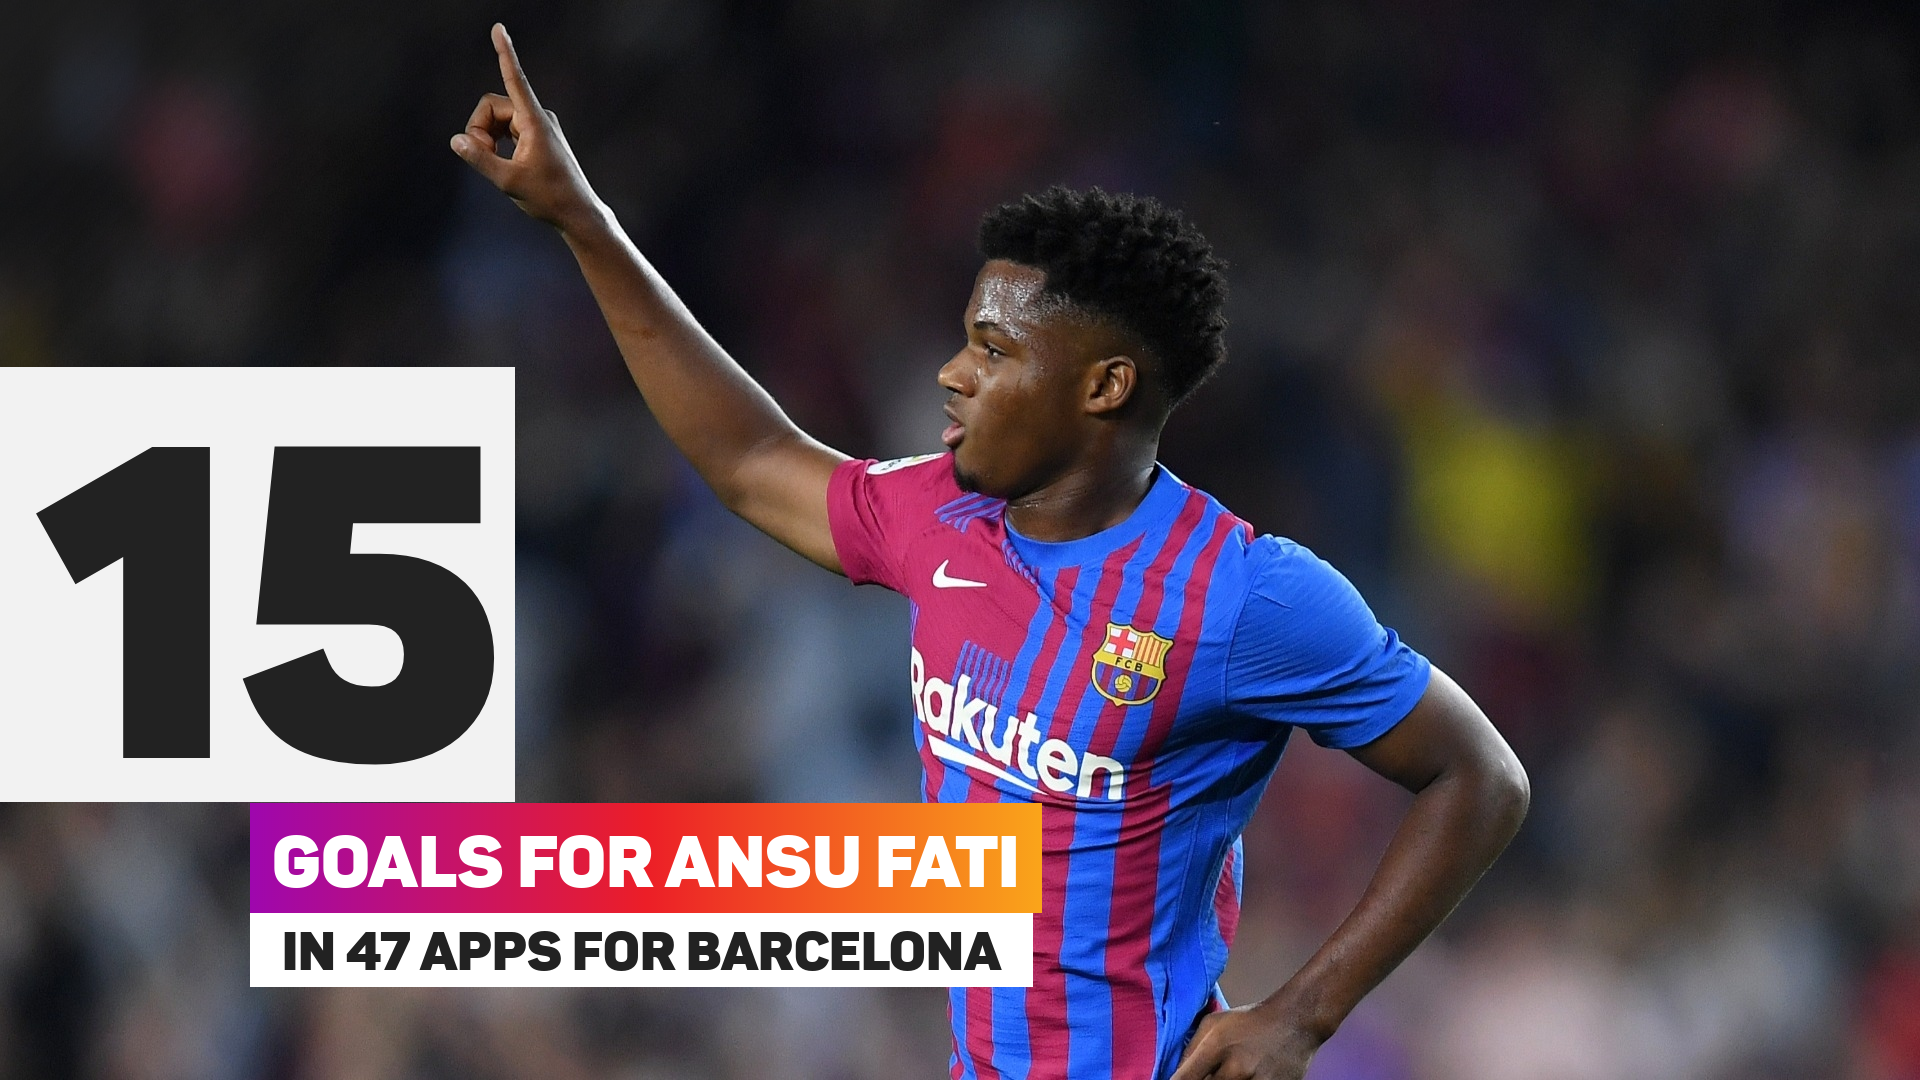 Ansu Fati has scored 15 goals for Barcelona